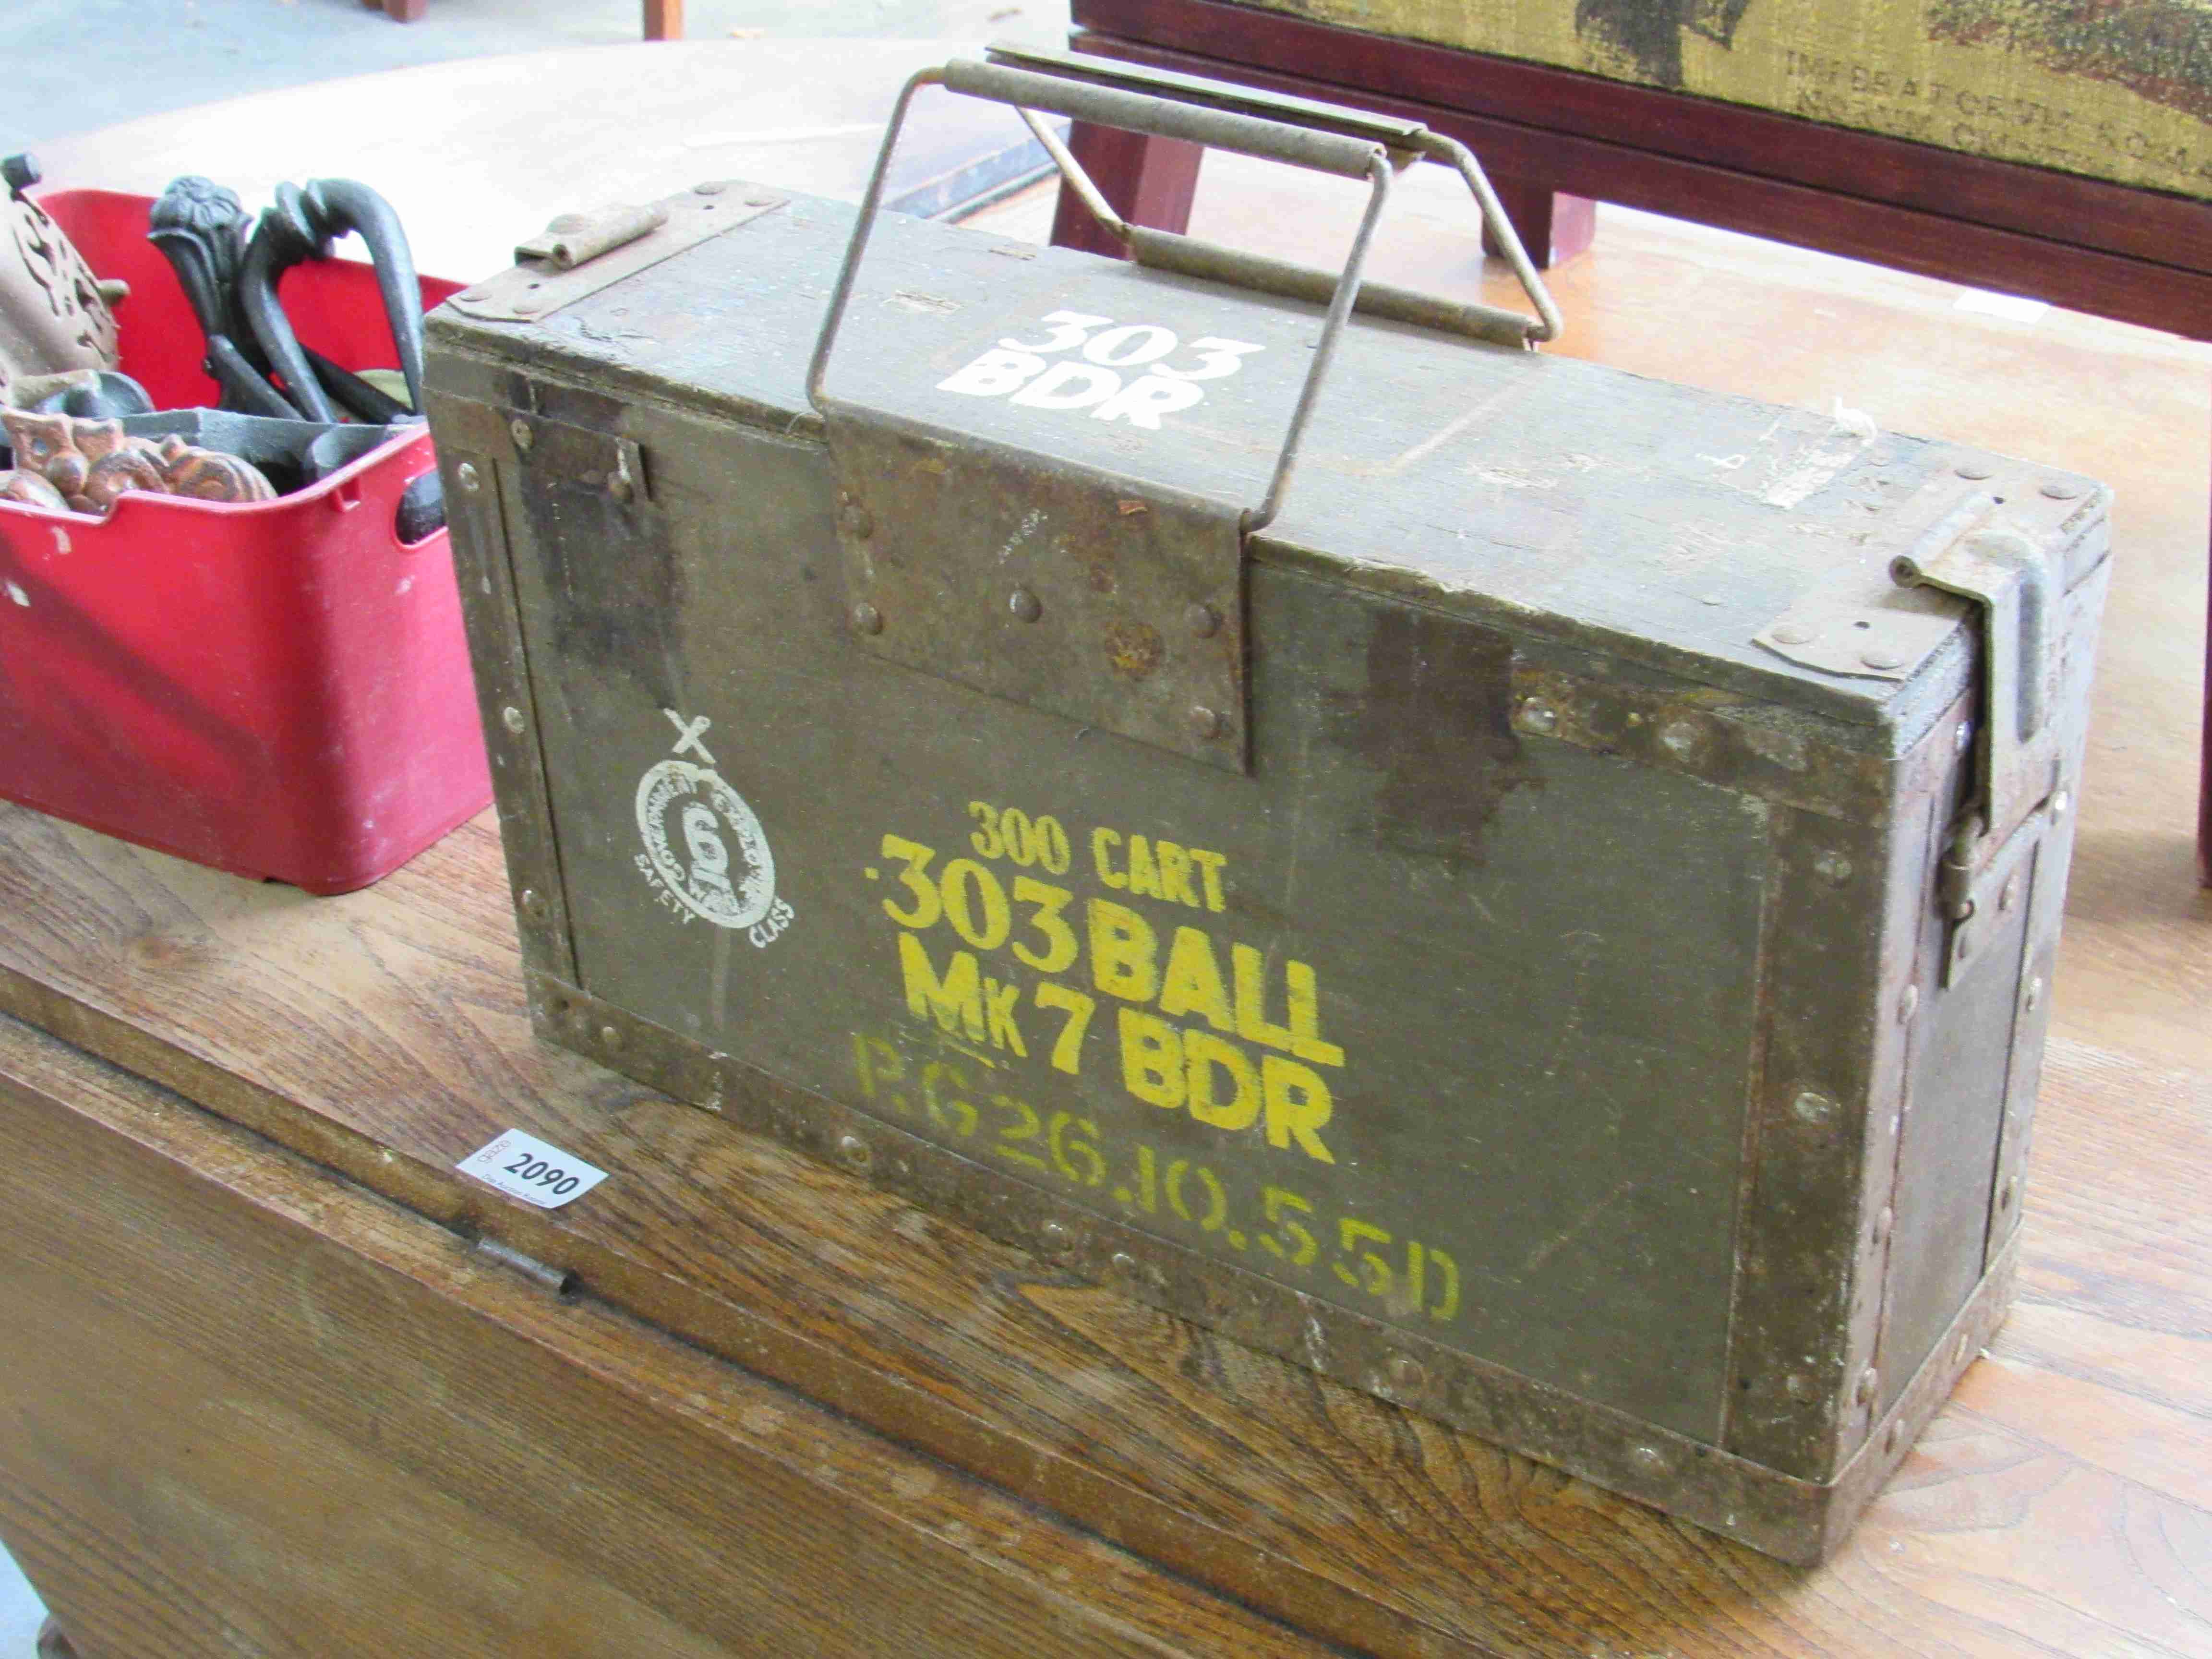 An ammo box and mixed metal wares,